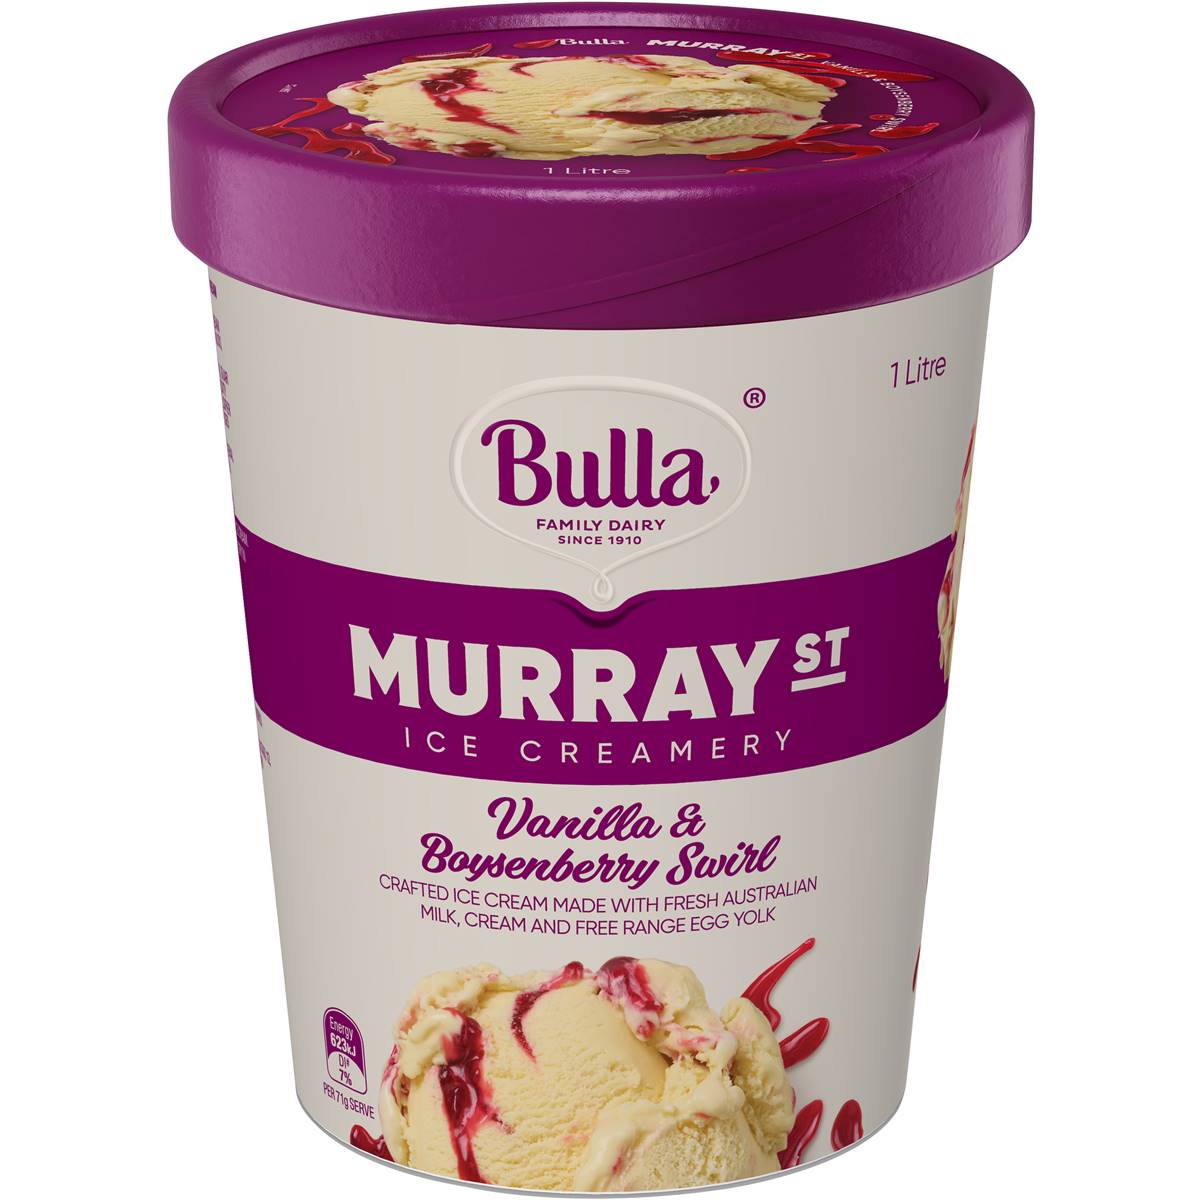 Bulla Murray St Ice Cream Vanilla & Boysenberry Swirl 1L